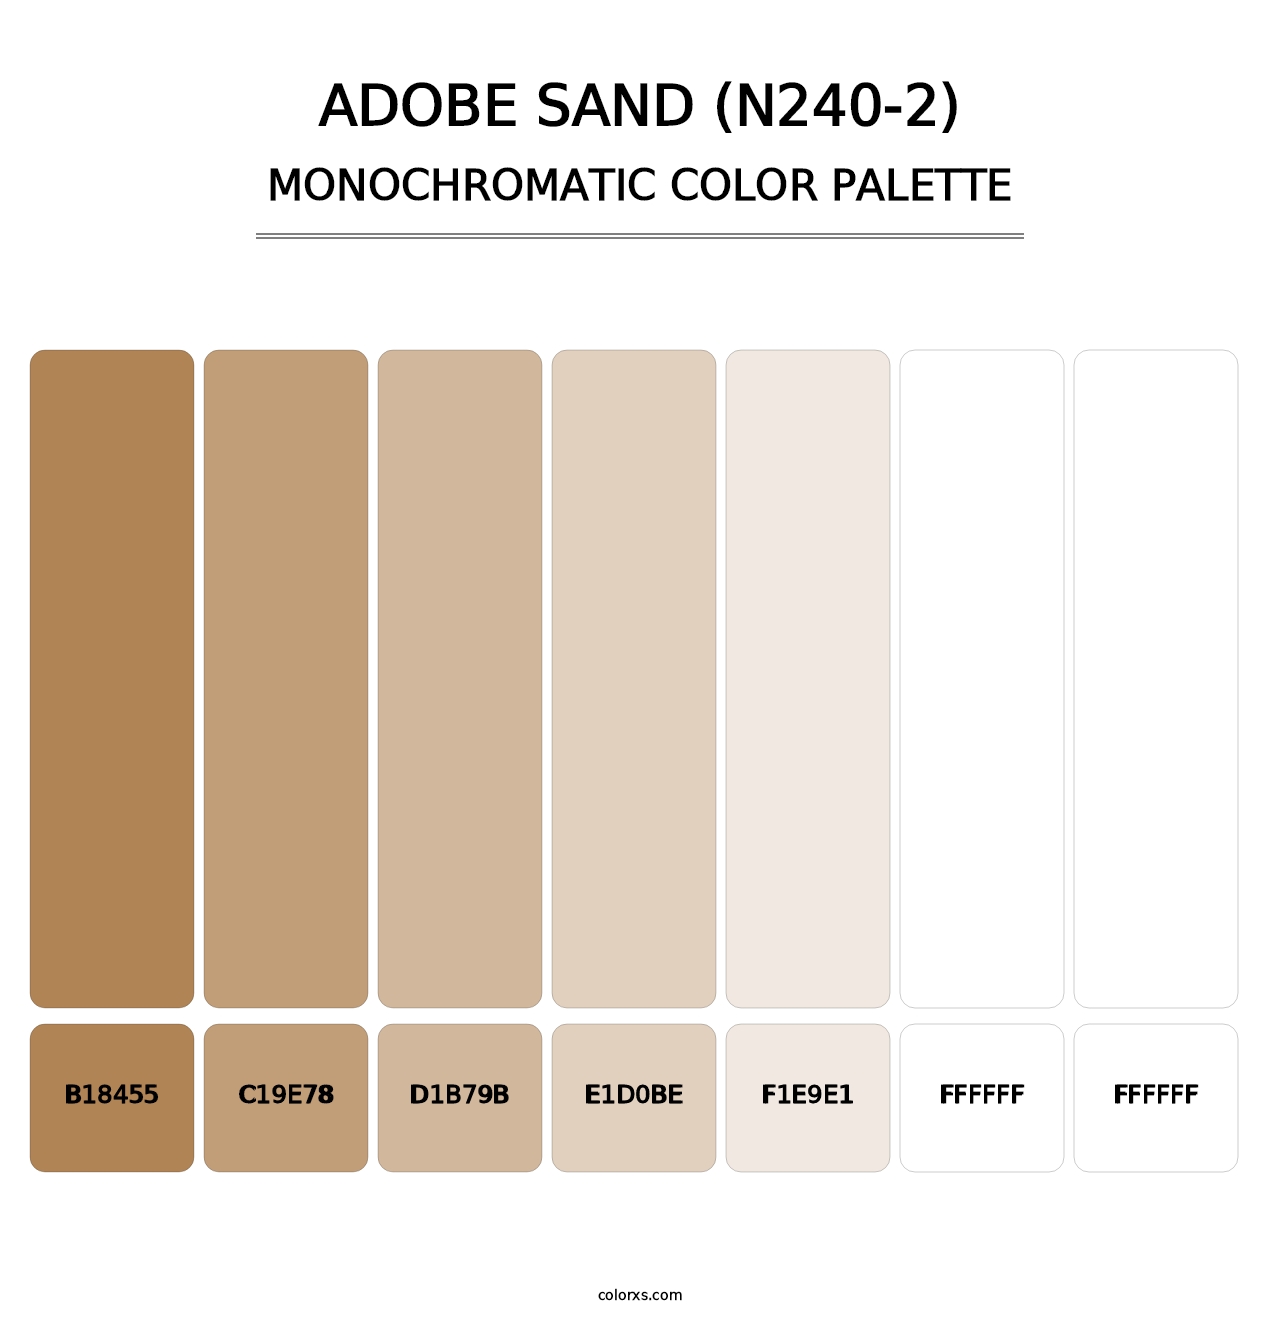 Adobe Sand (N240-2) - Monochromatic Color Palette